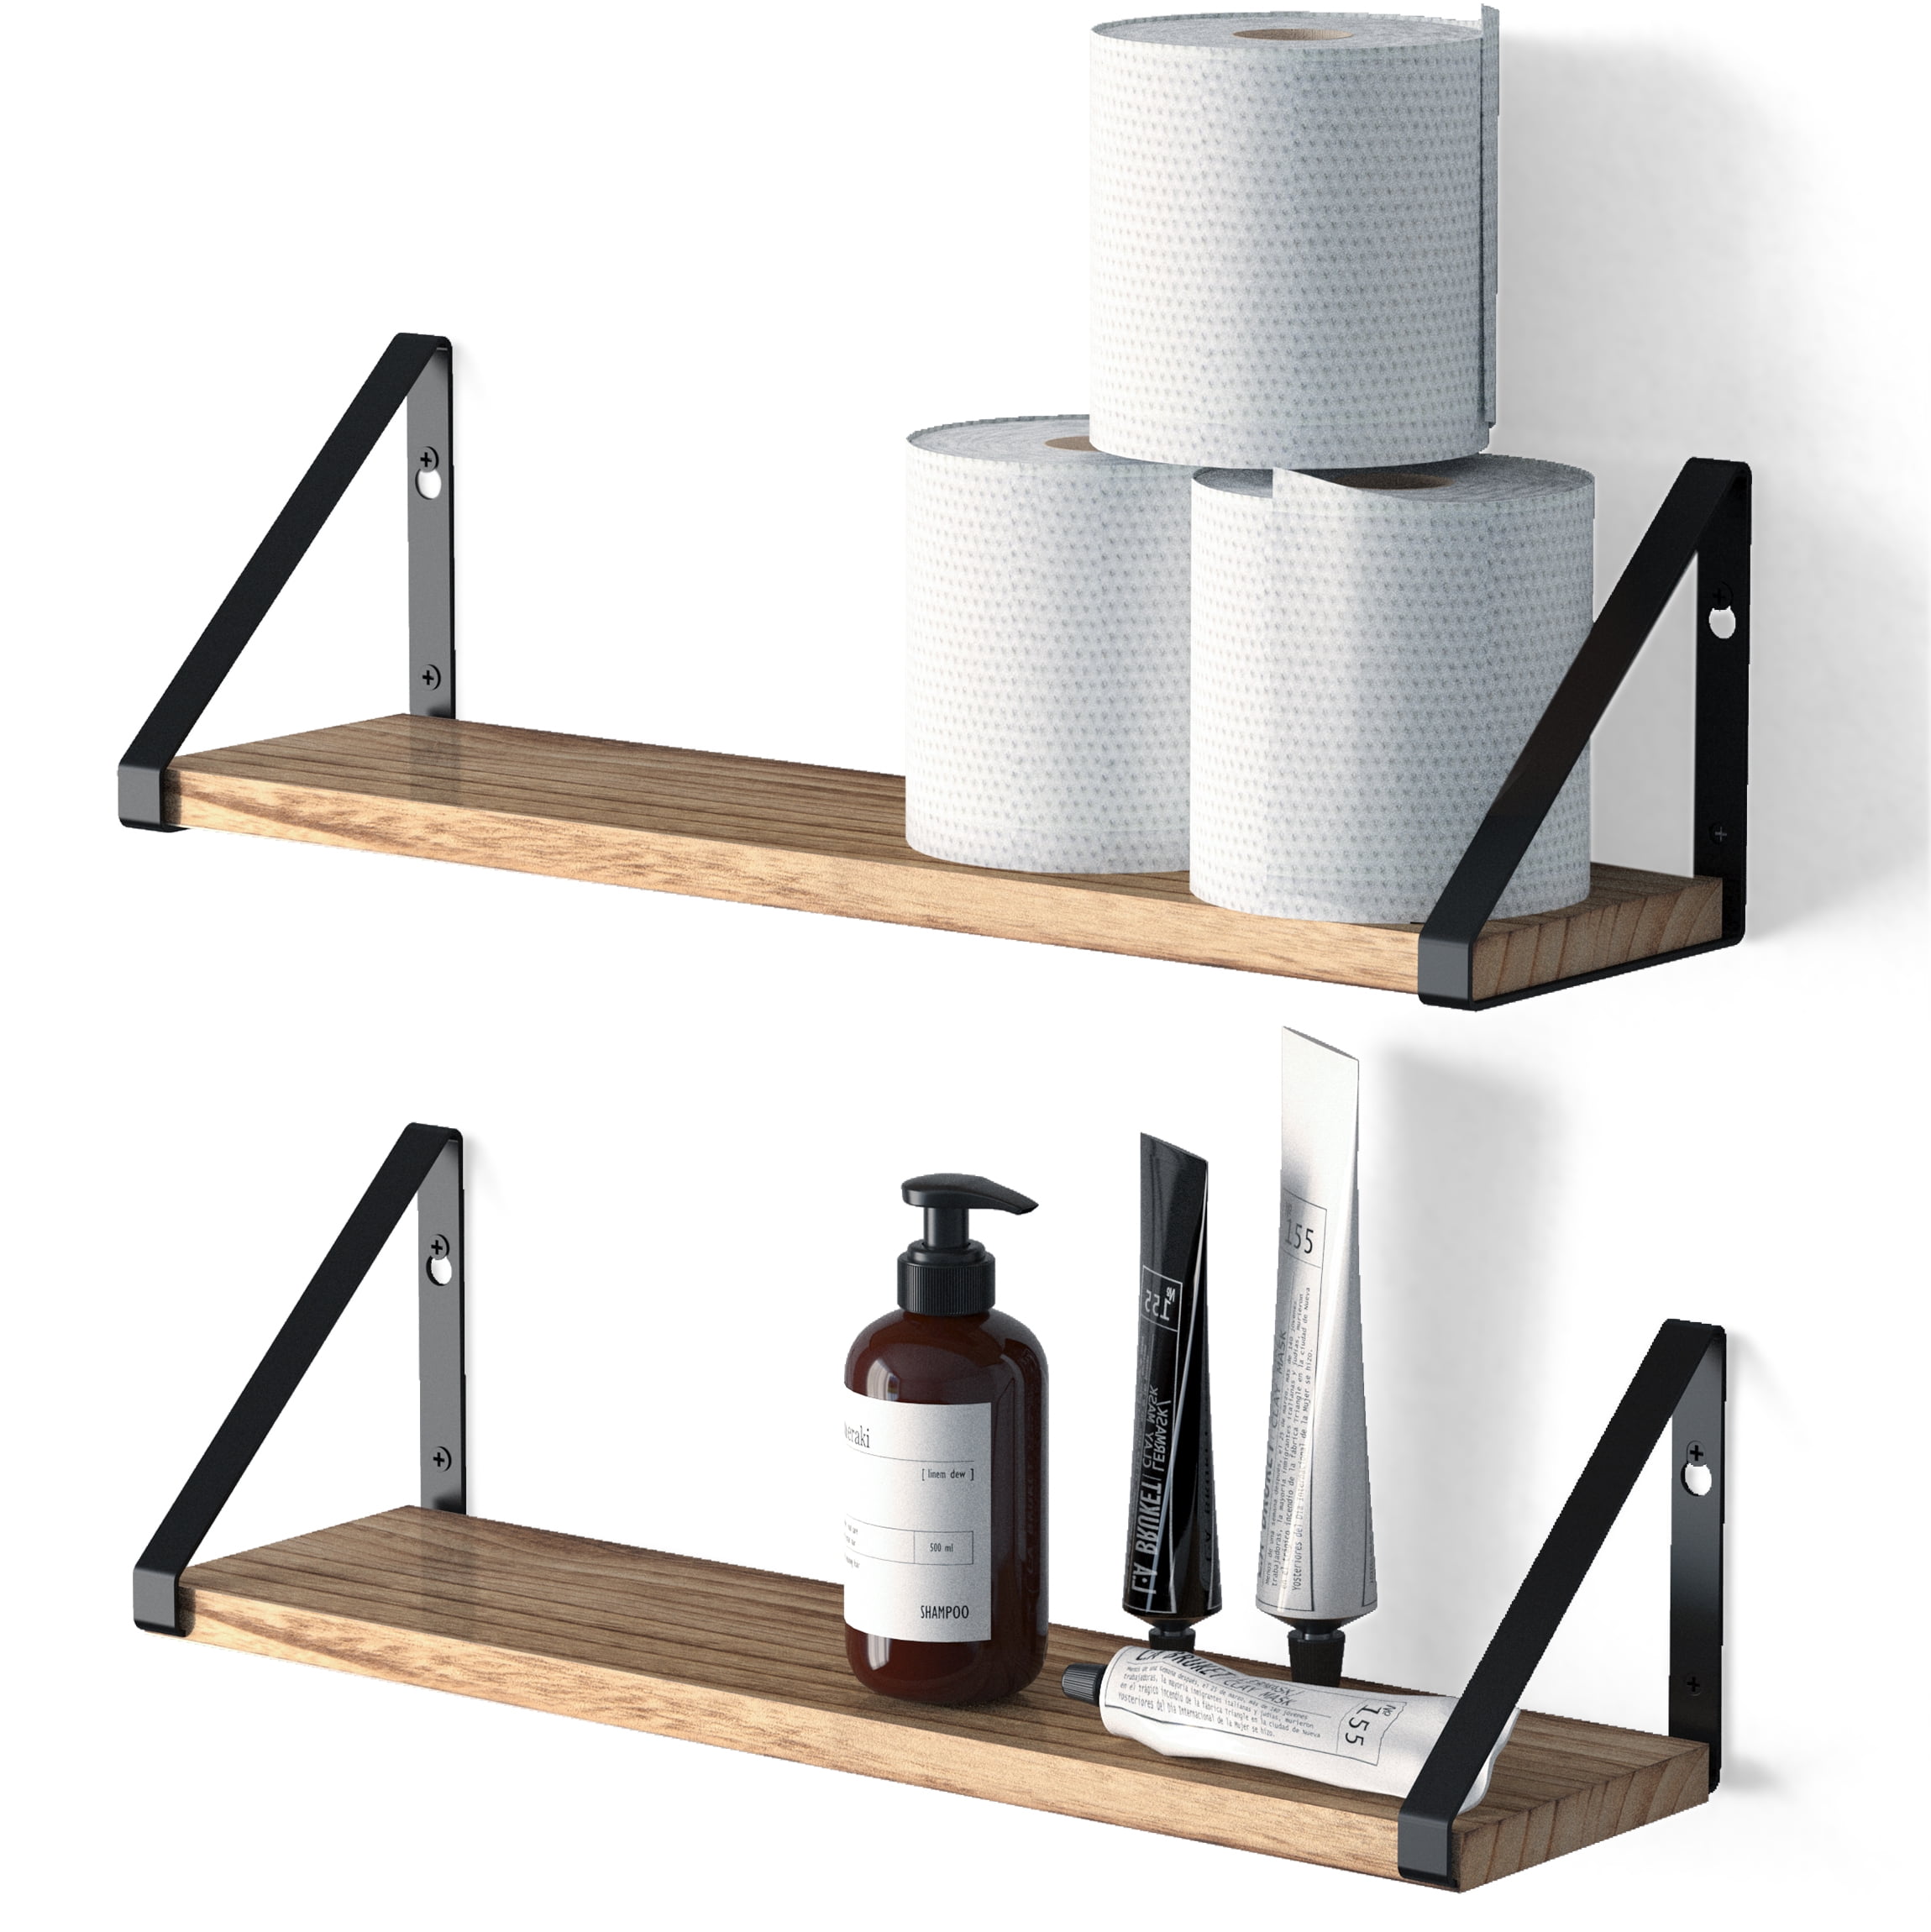 Wallniture Ponza Rustic Floating Shelf for Bathroom Wall Shelves Over the  Toilets Storage, Natural Burned, Set of 2 